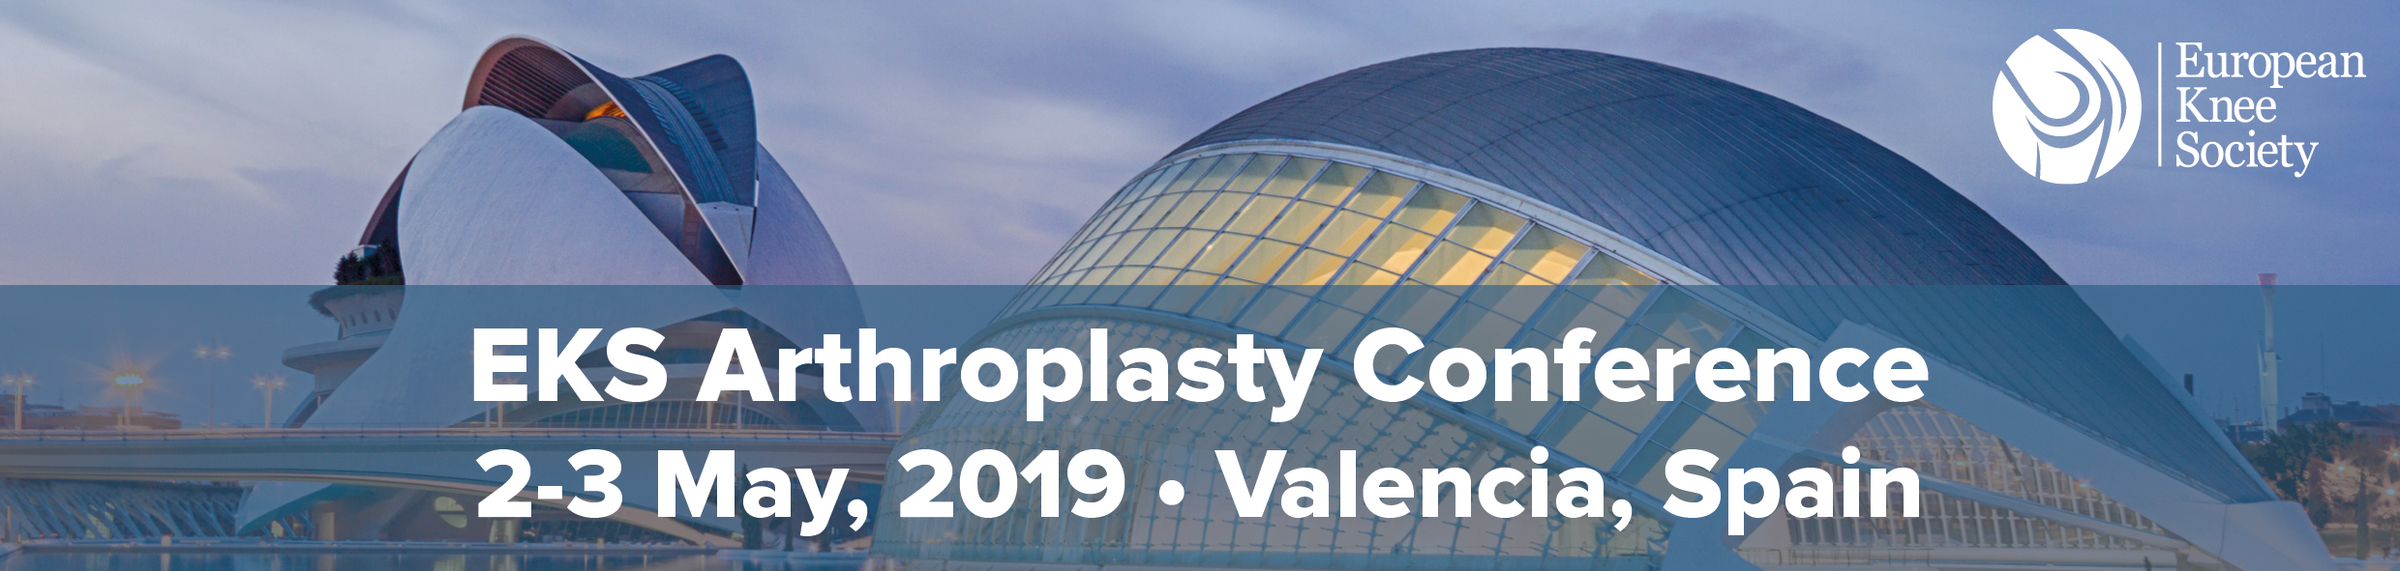 EKS Arthroplasty Conference 2019